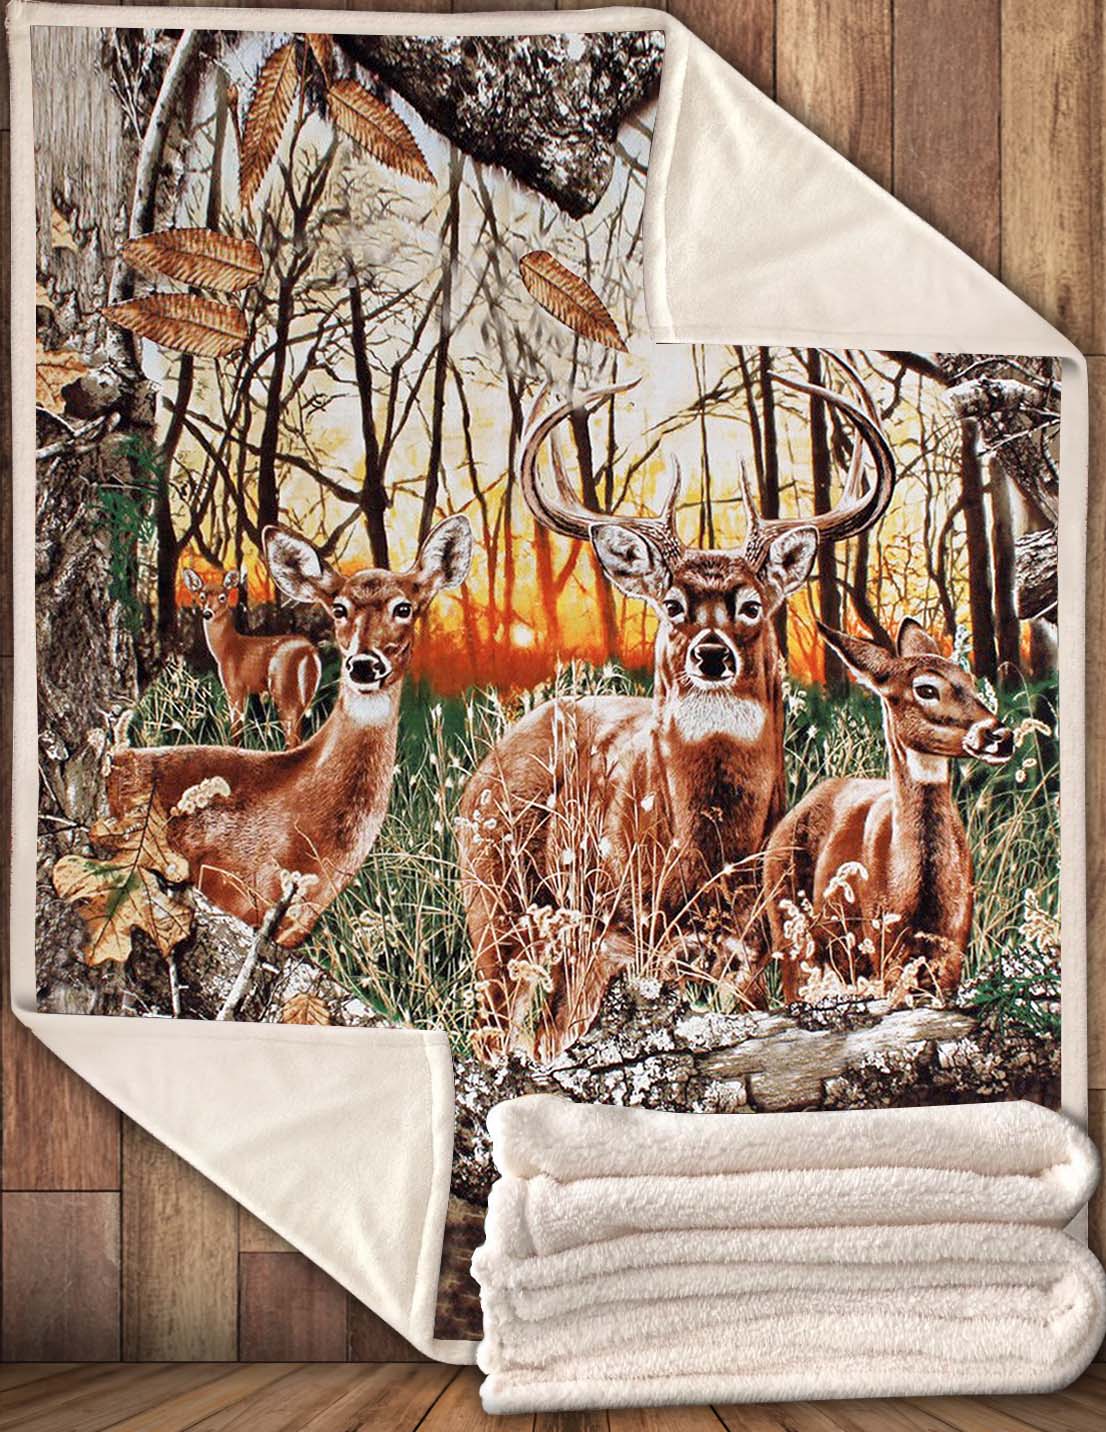 Hunting Deer Camo Blanket 06562